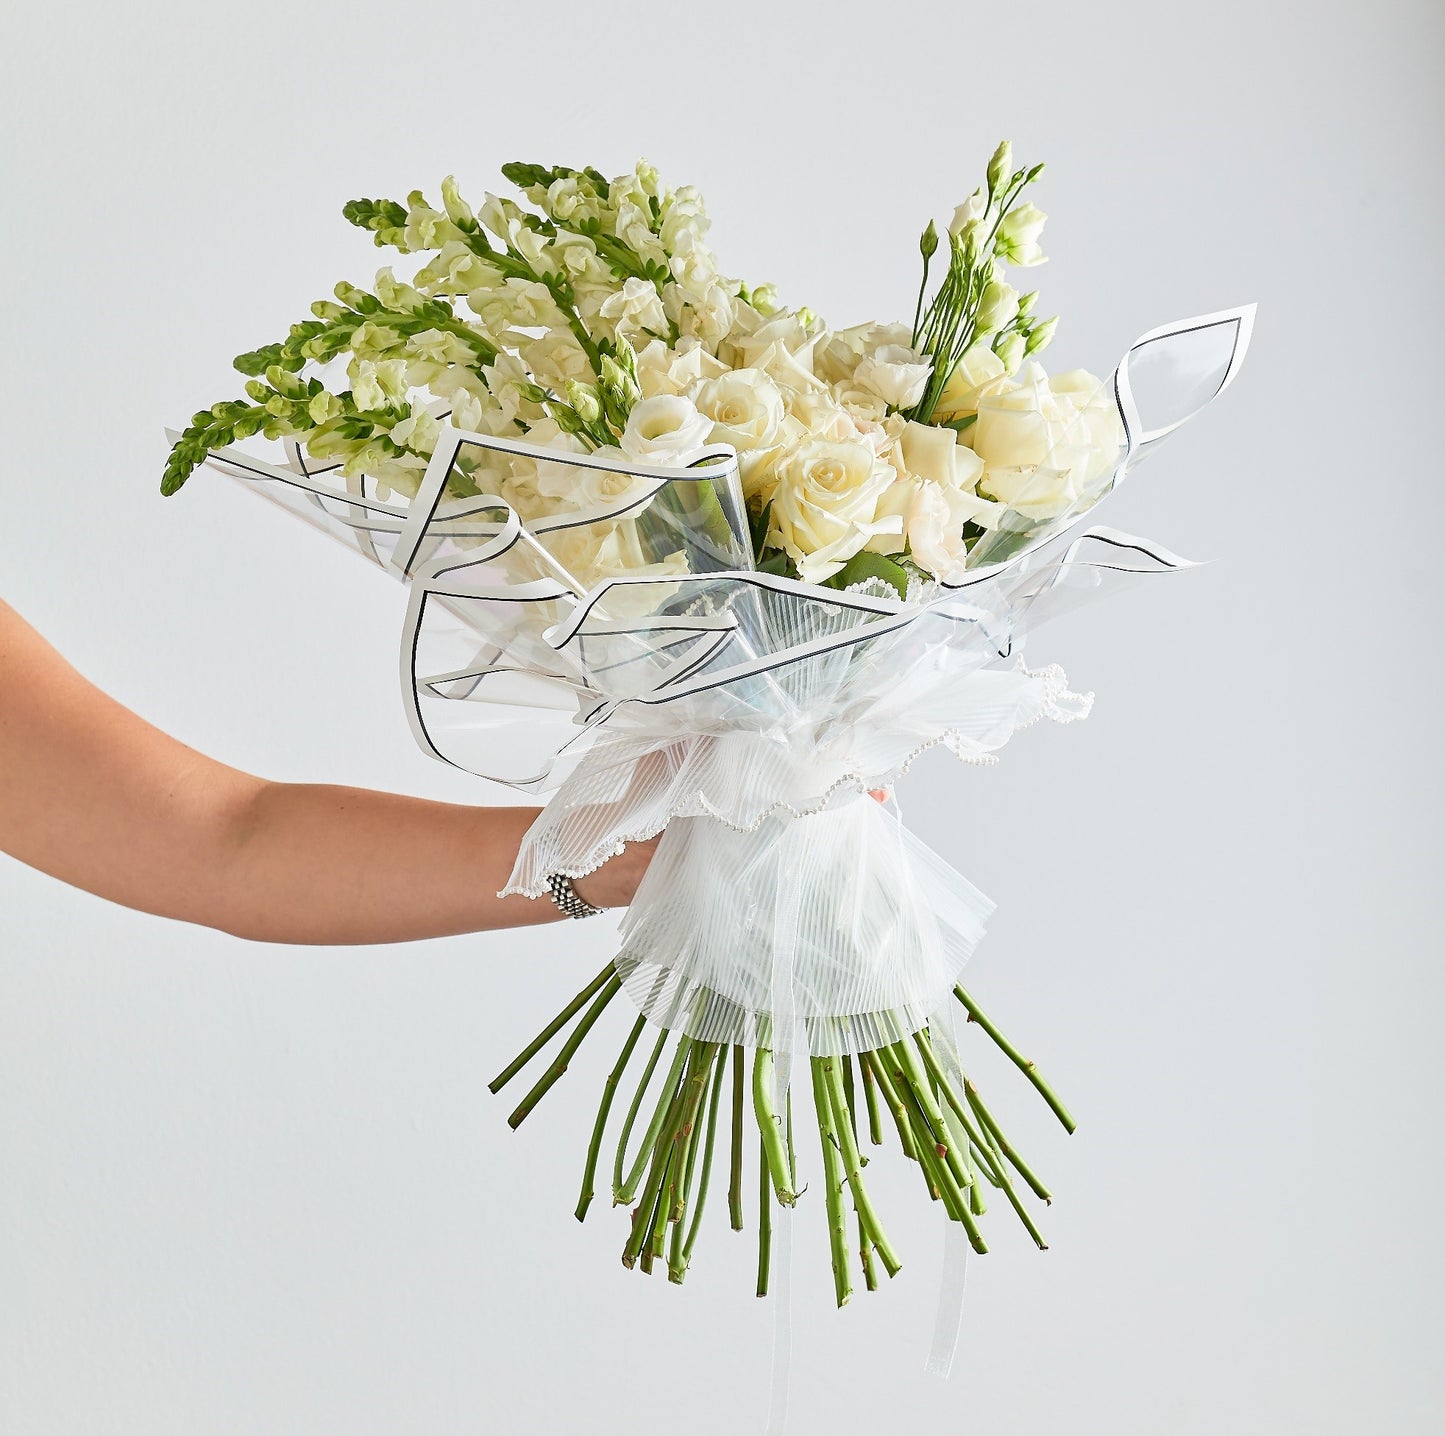 Handwrapped bouquet